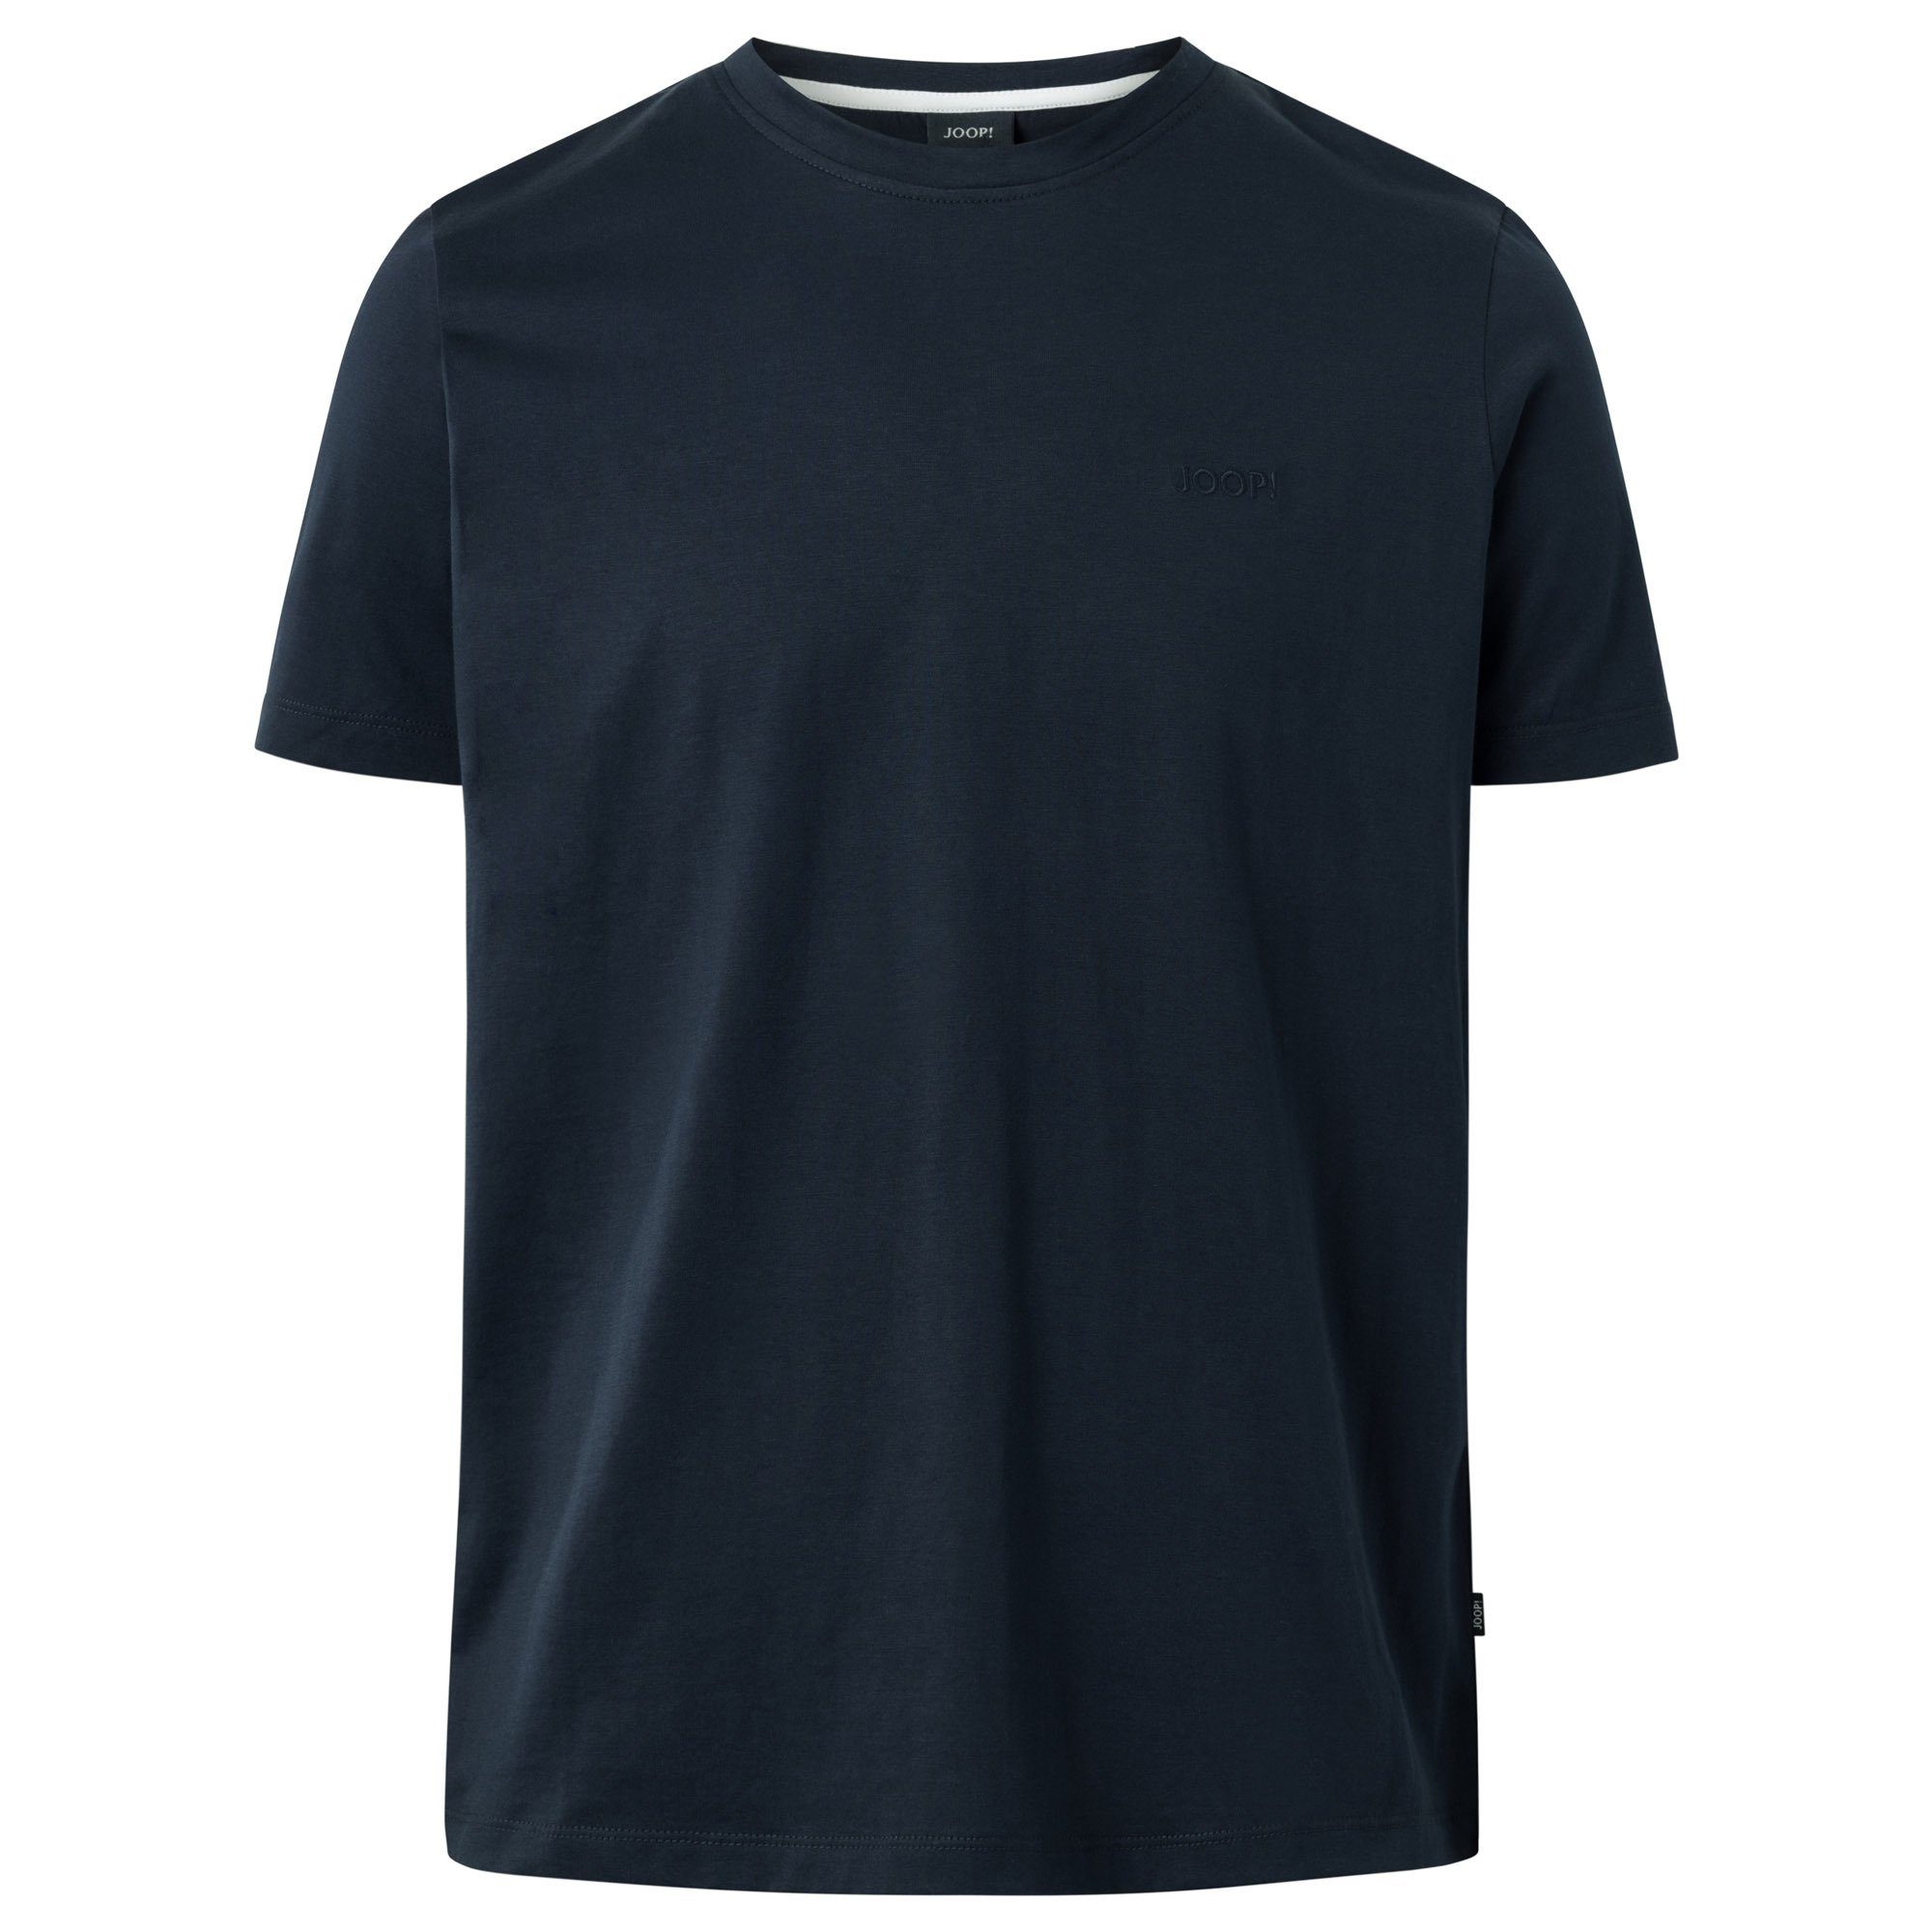 JOOP! T-Shirt Herren T-Shirt - Cosimo, Rundhals, Halbarm